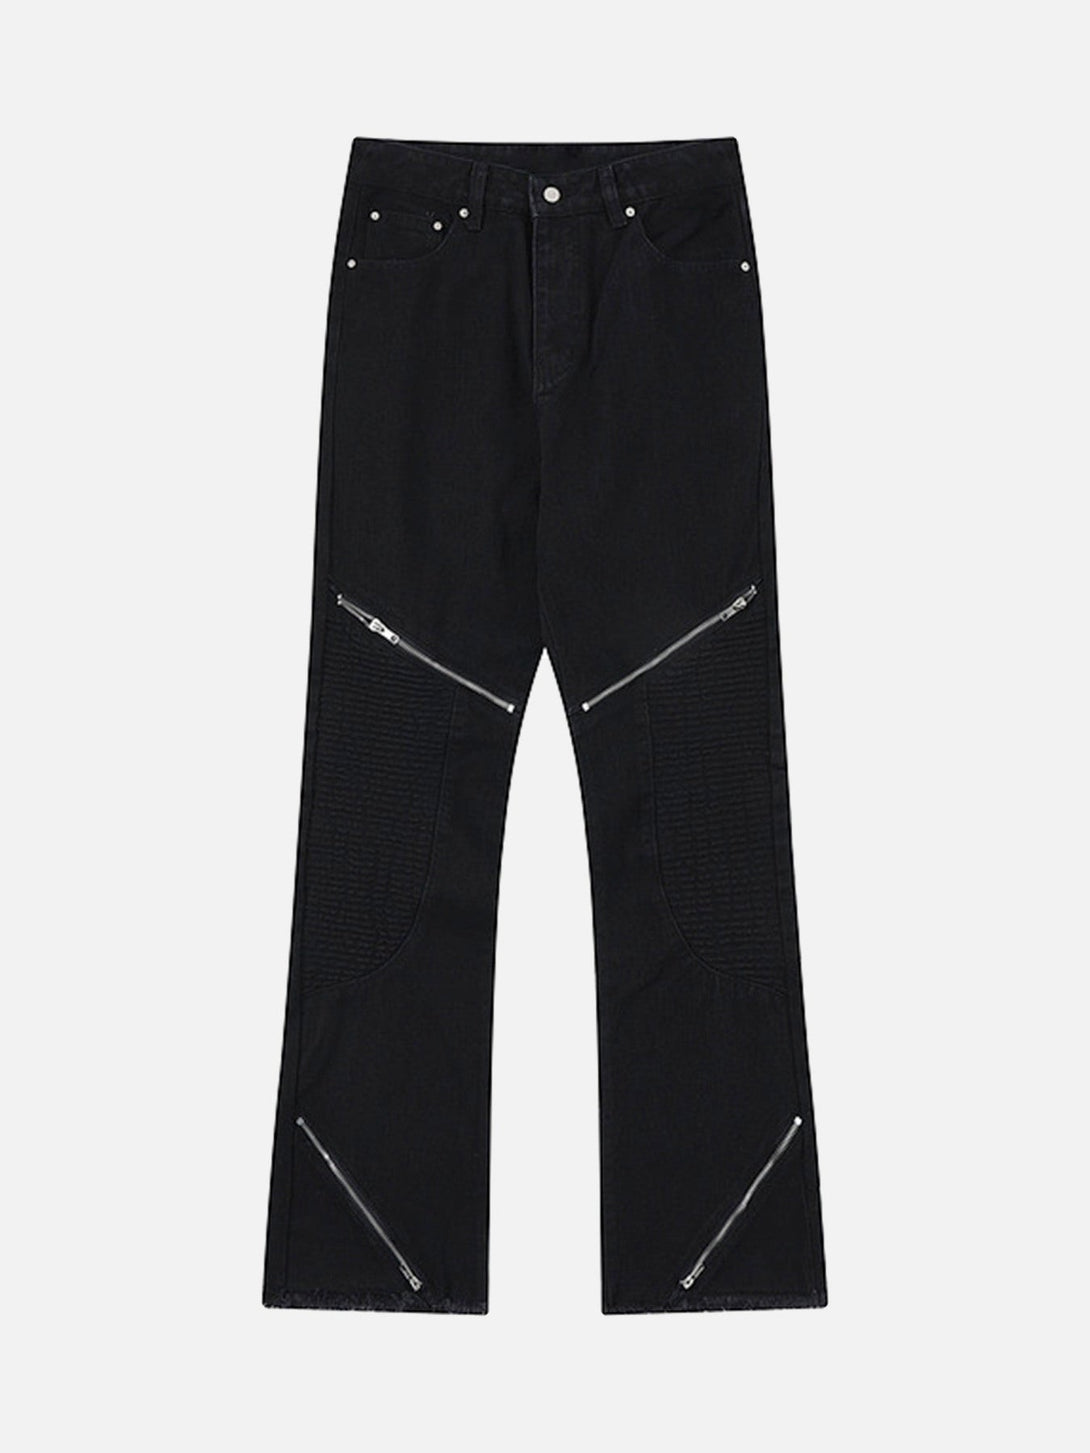 Majesda® - Loose Micro-flared Jeans- Outfit Ideas - Streetwear Fashion - majesda.com